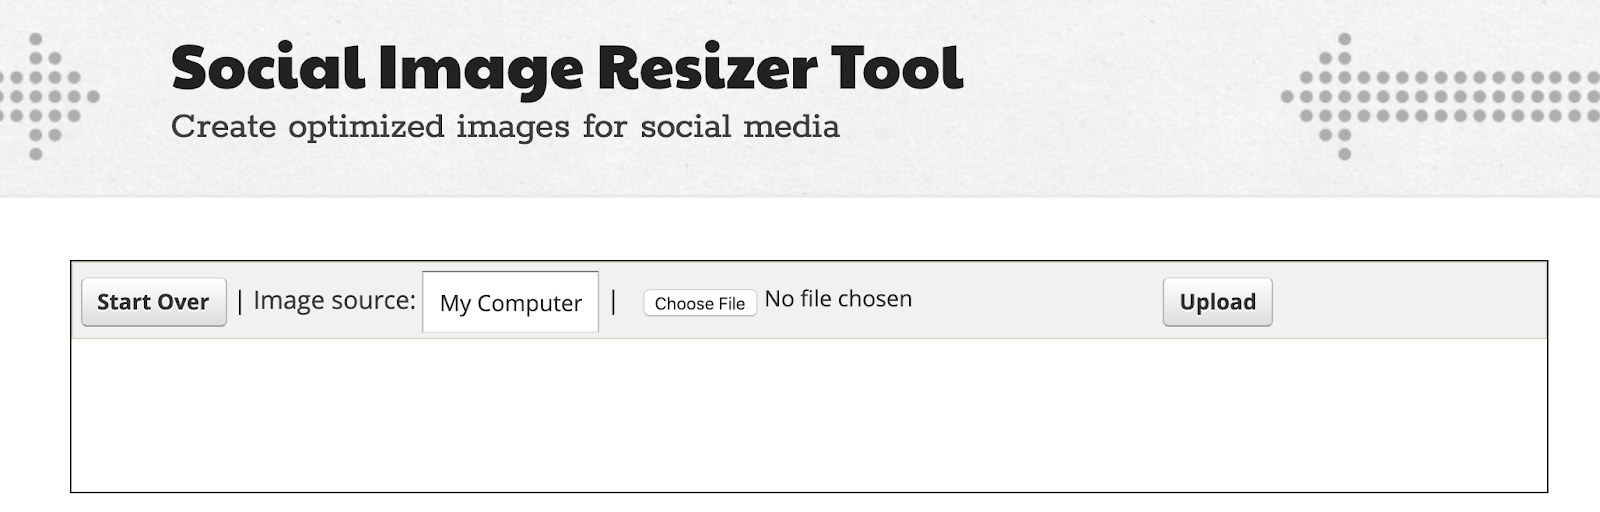 social image resizer tool